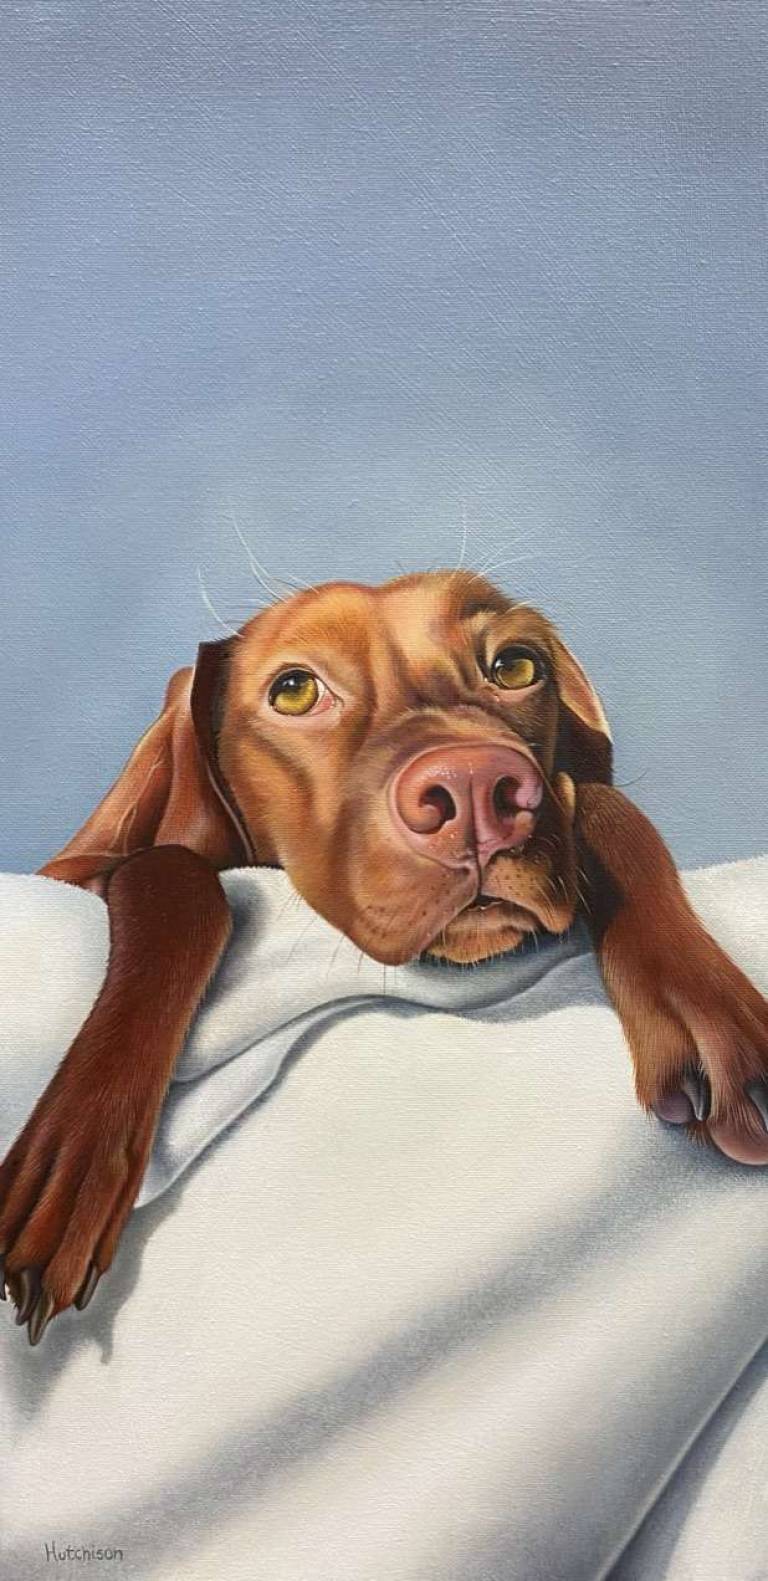 'Dog Tired' - Susan Hutchison